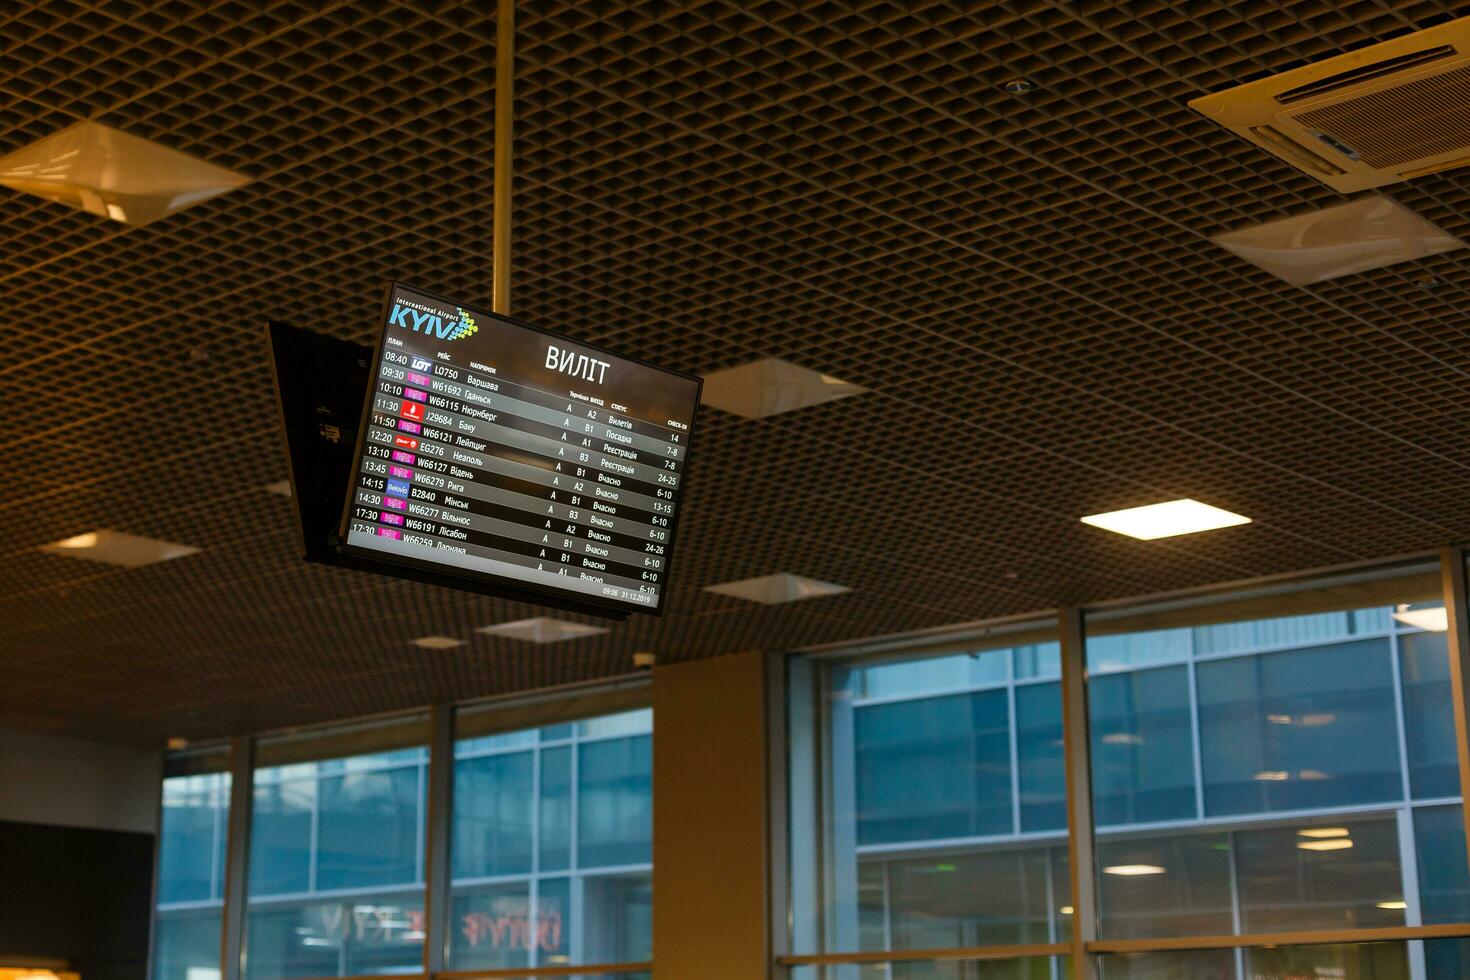 kiev, Oekraïne - dec 31, 2019 elektronisch bord van vertrek Bij de luchthaven Zhuliany kiev foto